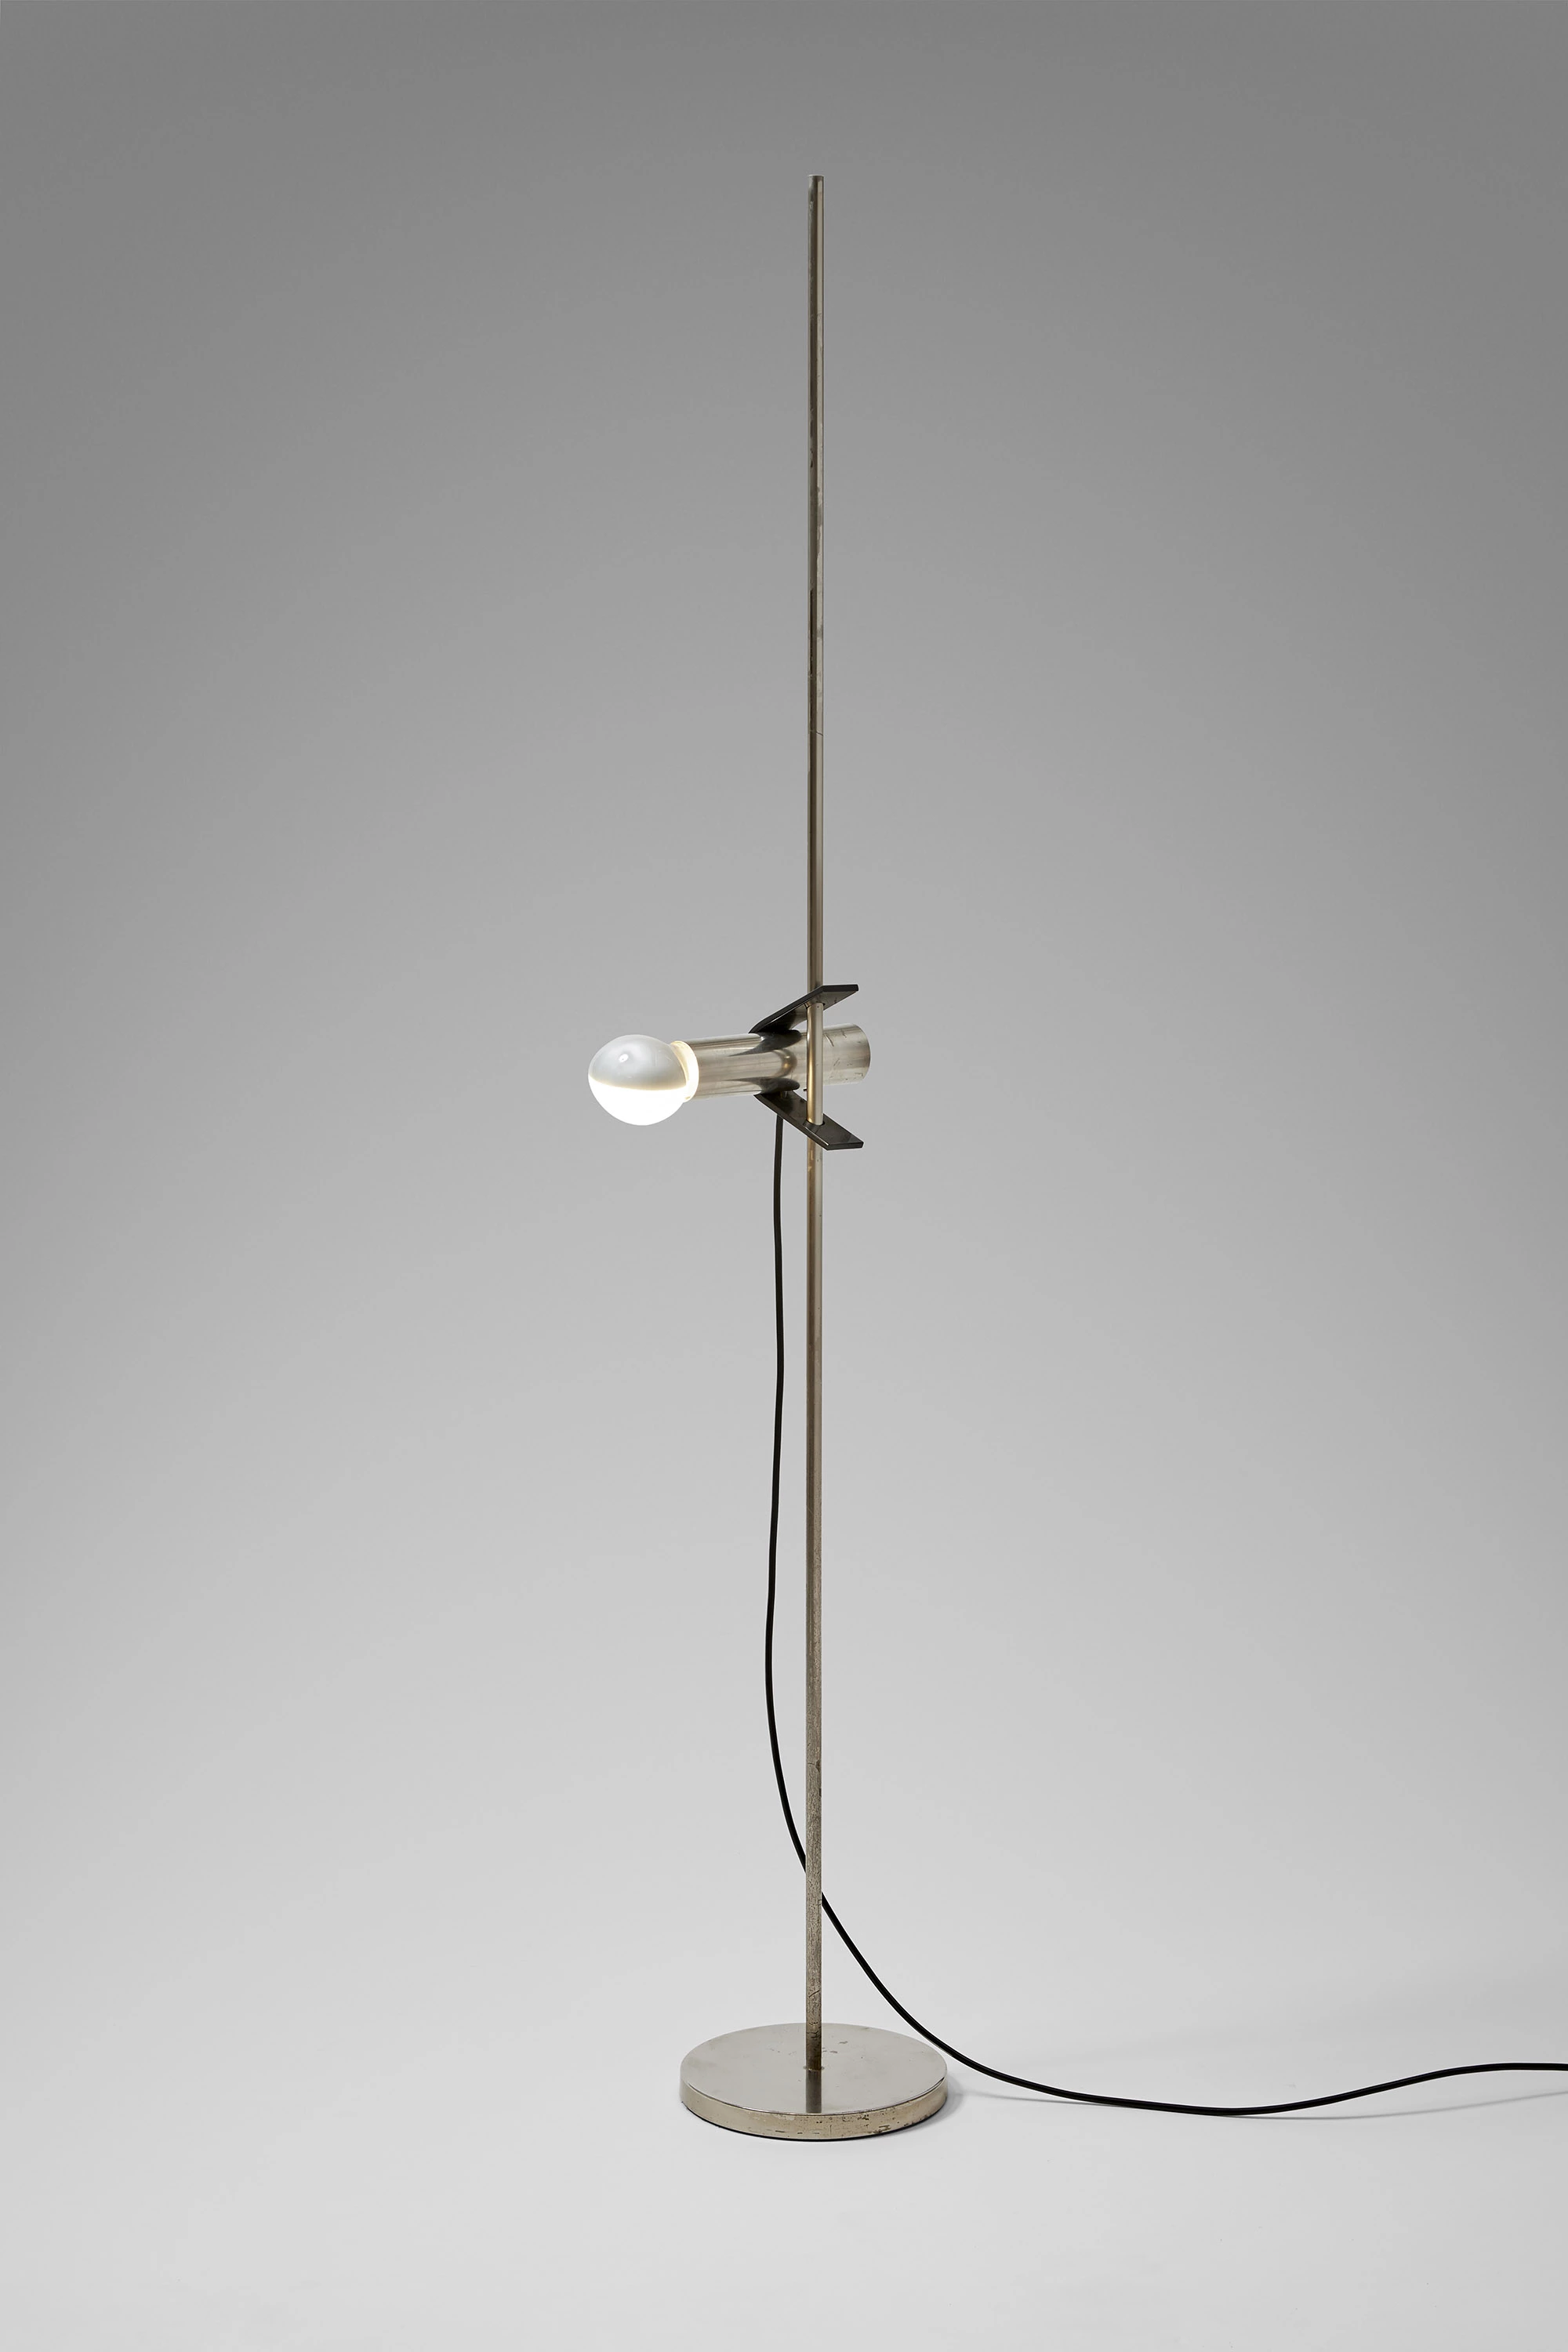 399  - Angelo and Renato Ostuni and Forti  - Floor light - Galerie kreo